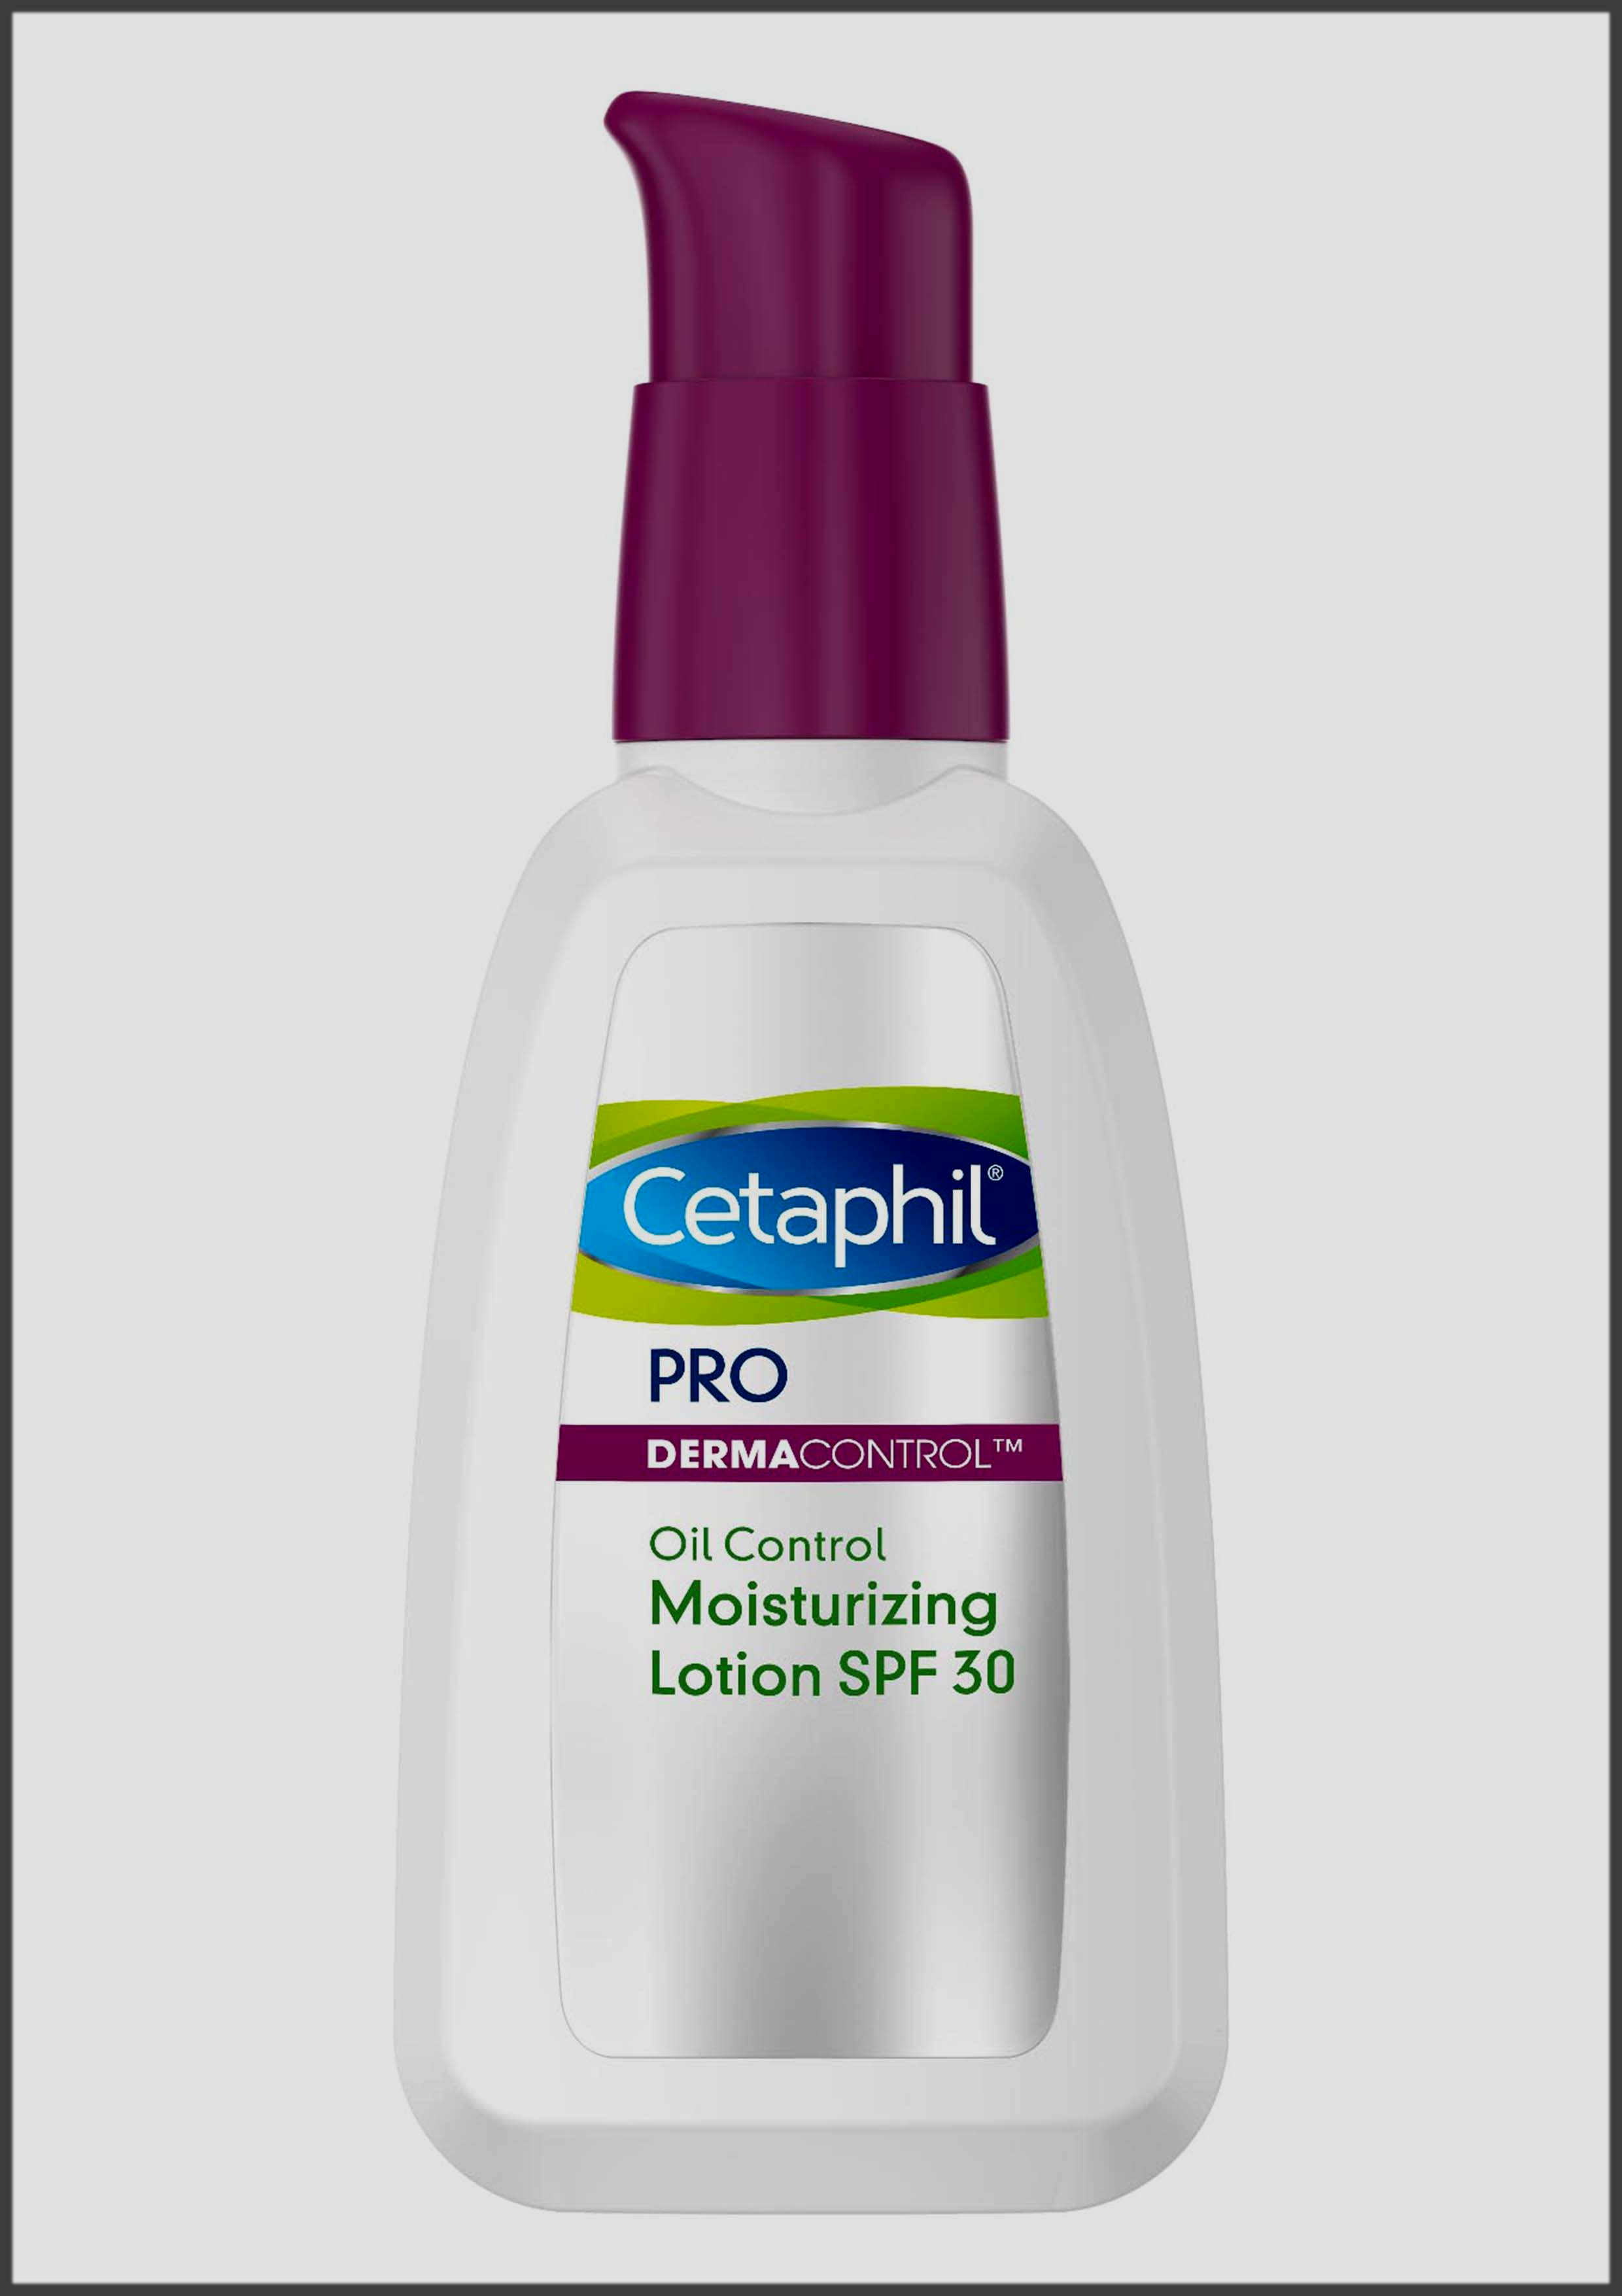 Cetaphil PRO moisturizer for oily skin